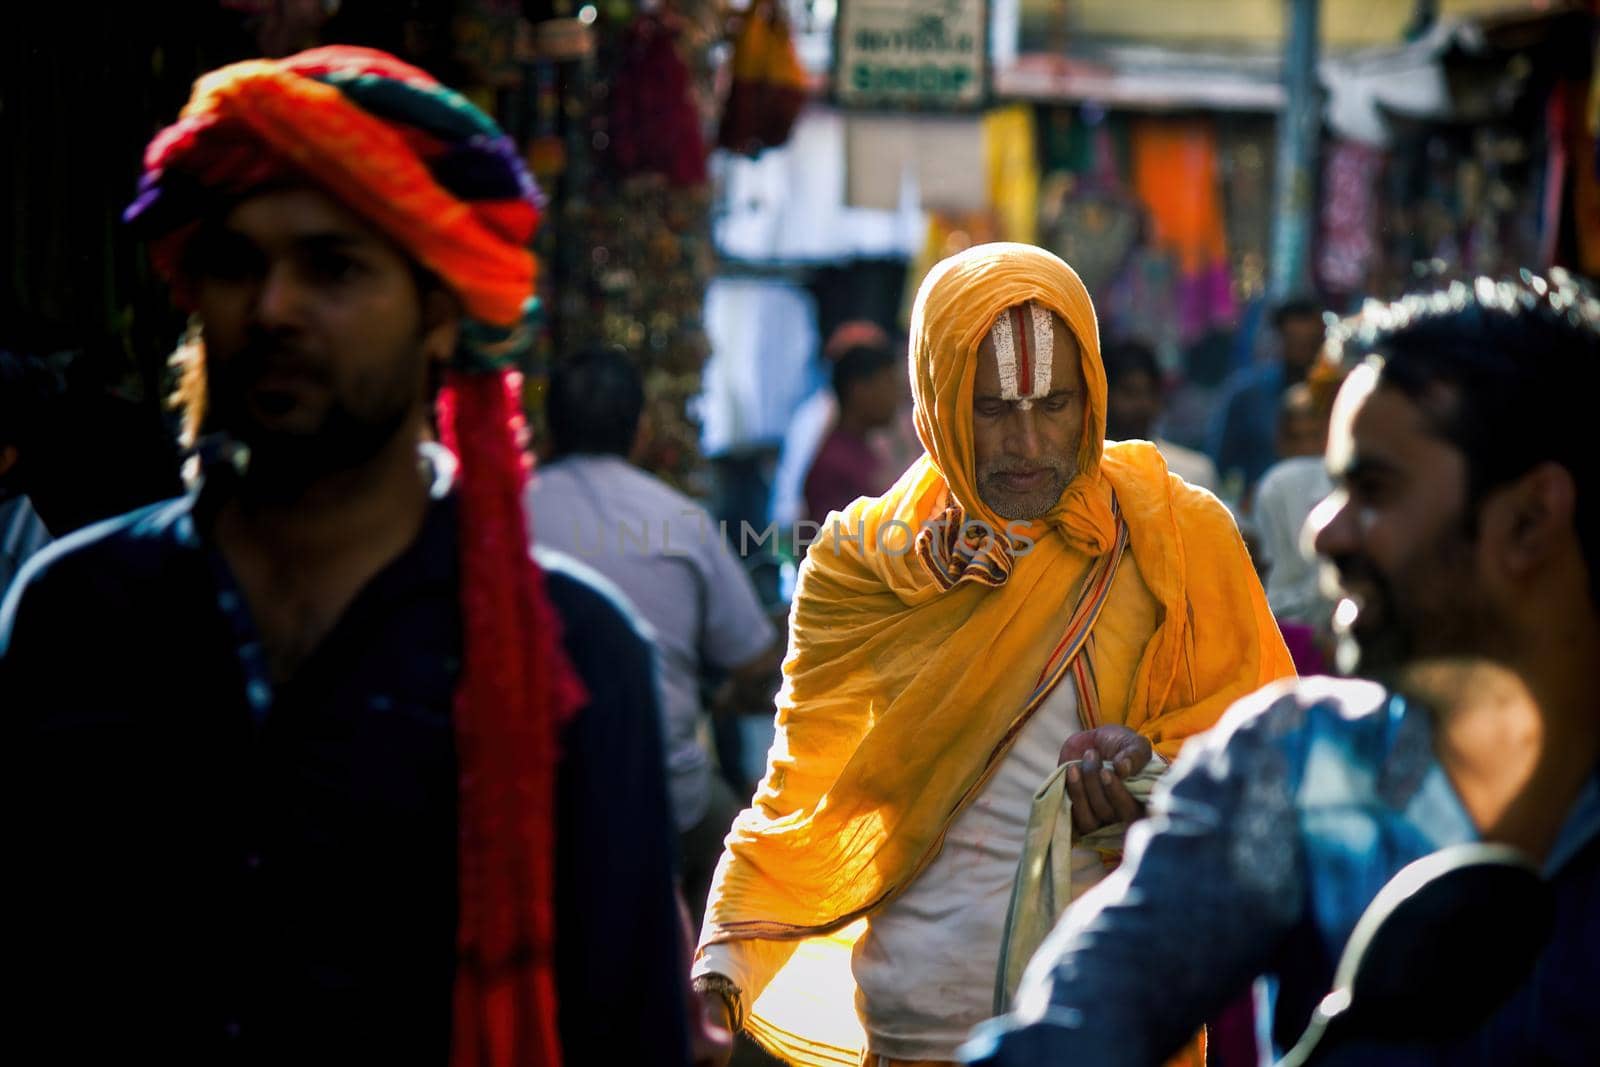 Pushkar, India - November 10, 2016: A hindu man with vishnu tilak on his forehead and orange ethnic wear walking in famous pushkar mela or fair in the state of Rajasthan by arpanbhatia